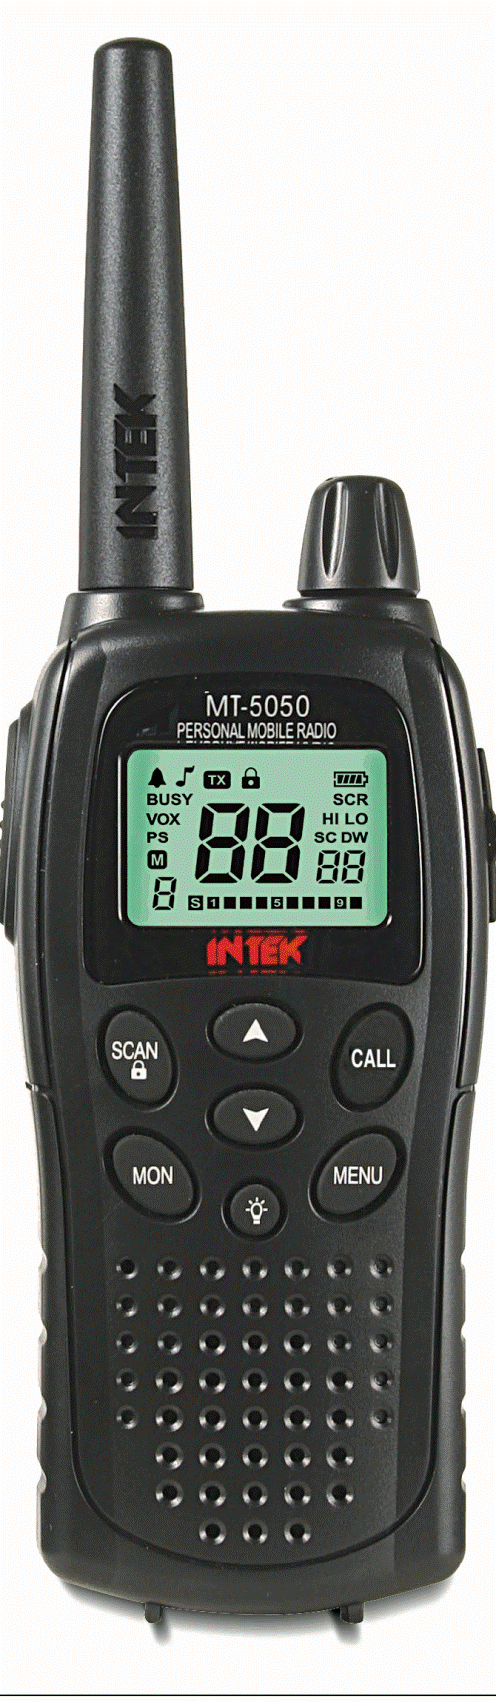 Intek MT-5050 - Handheld PMR radio